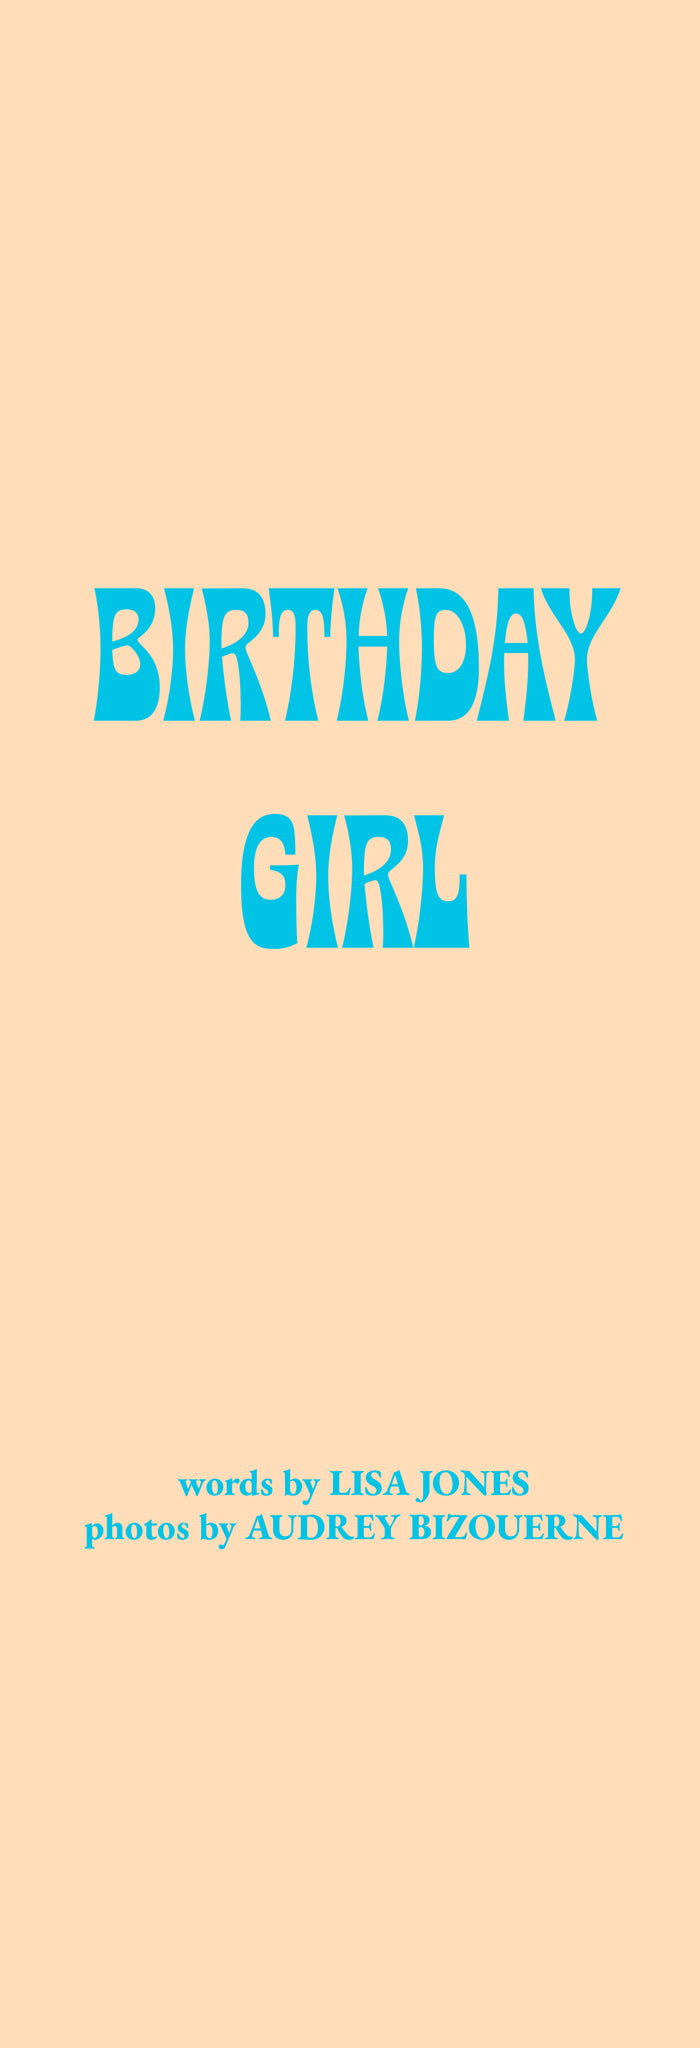 Birthday Girl, by Audrey Bizouerne and Lisa Jones